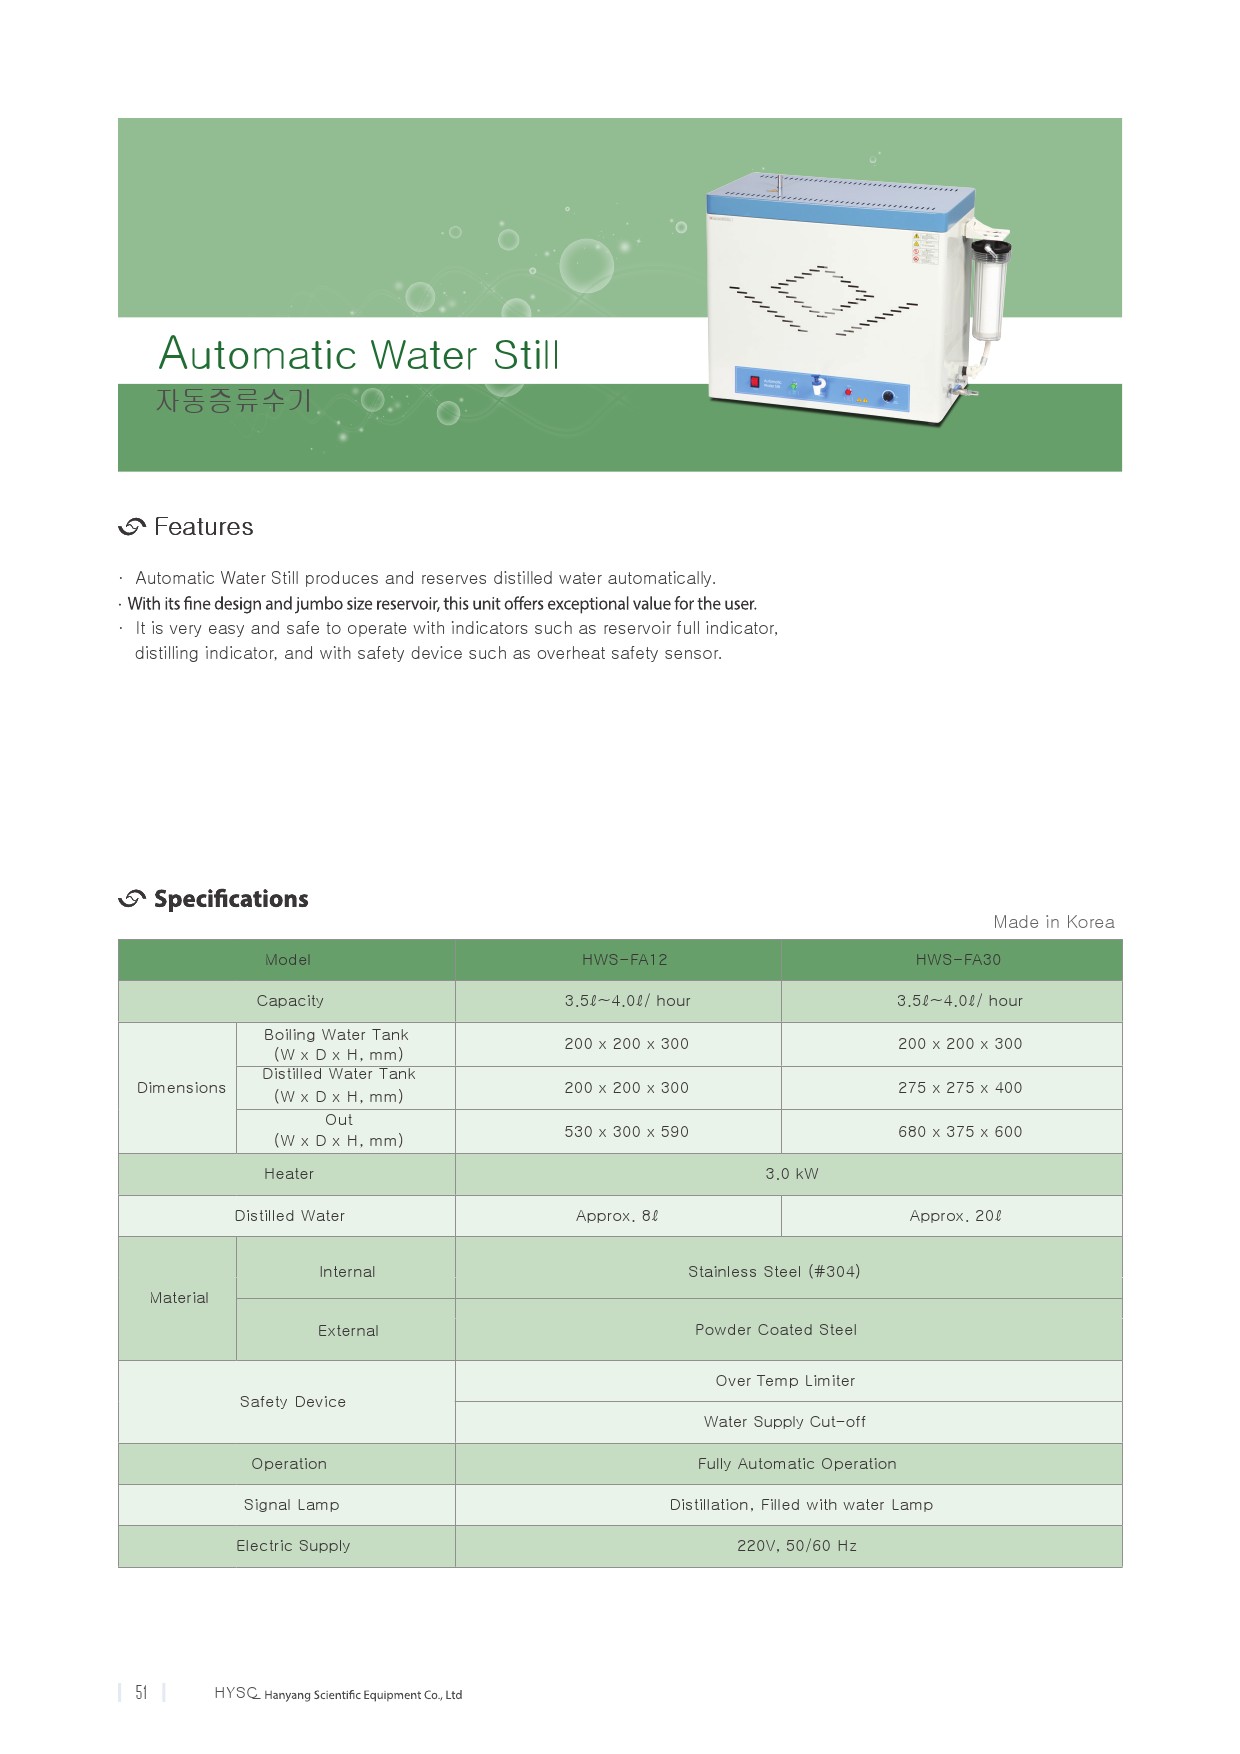 HYSC_Introduction_Automatic Water Still-1.jpg